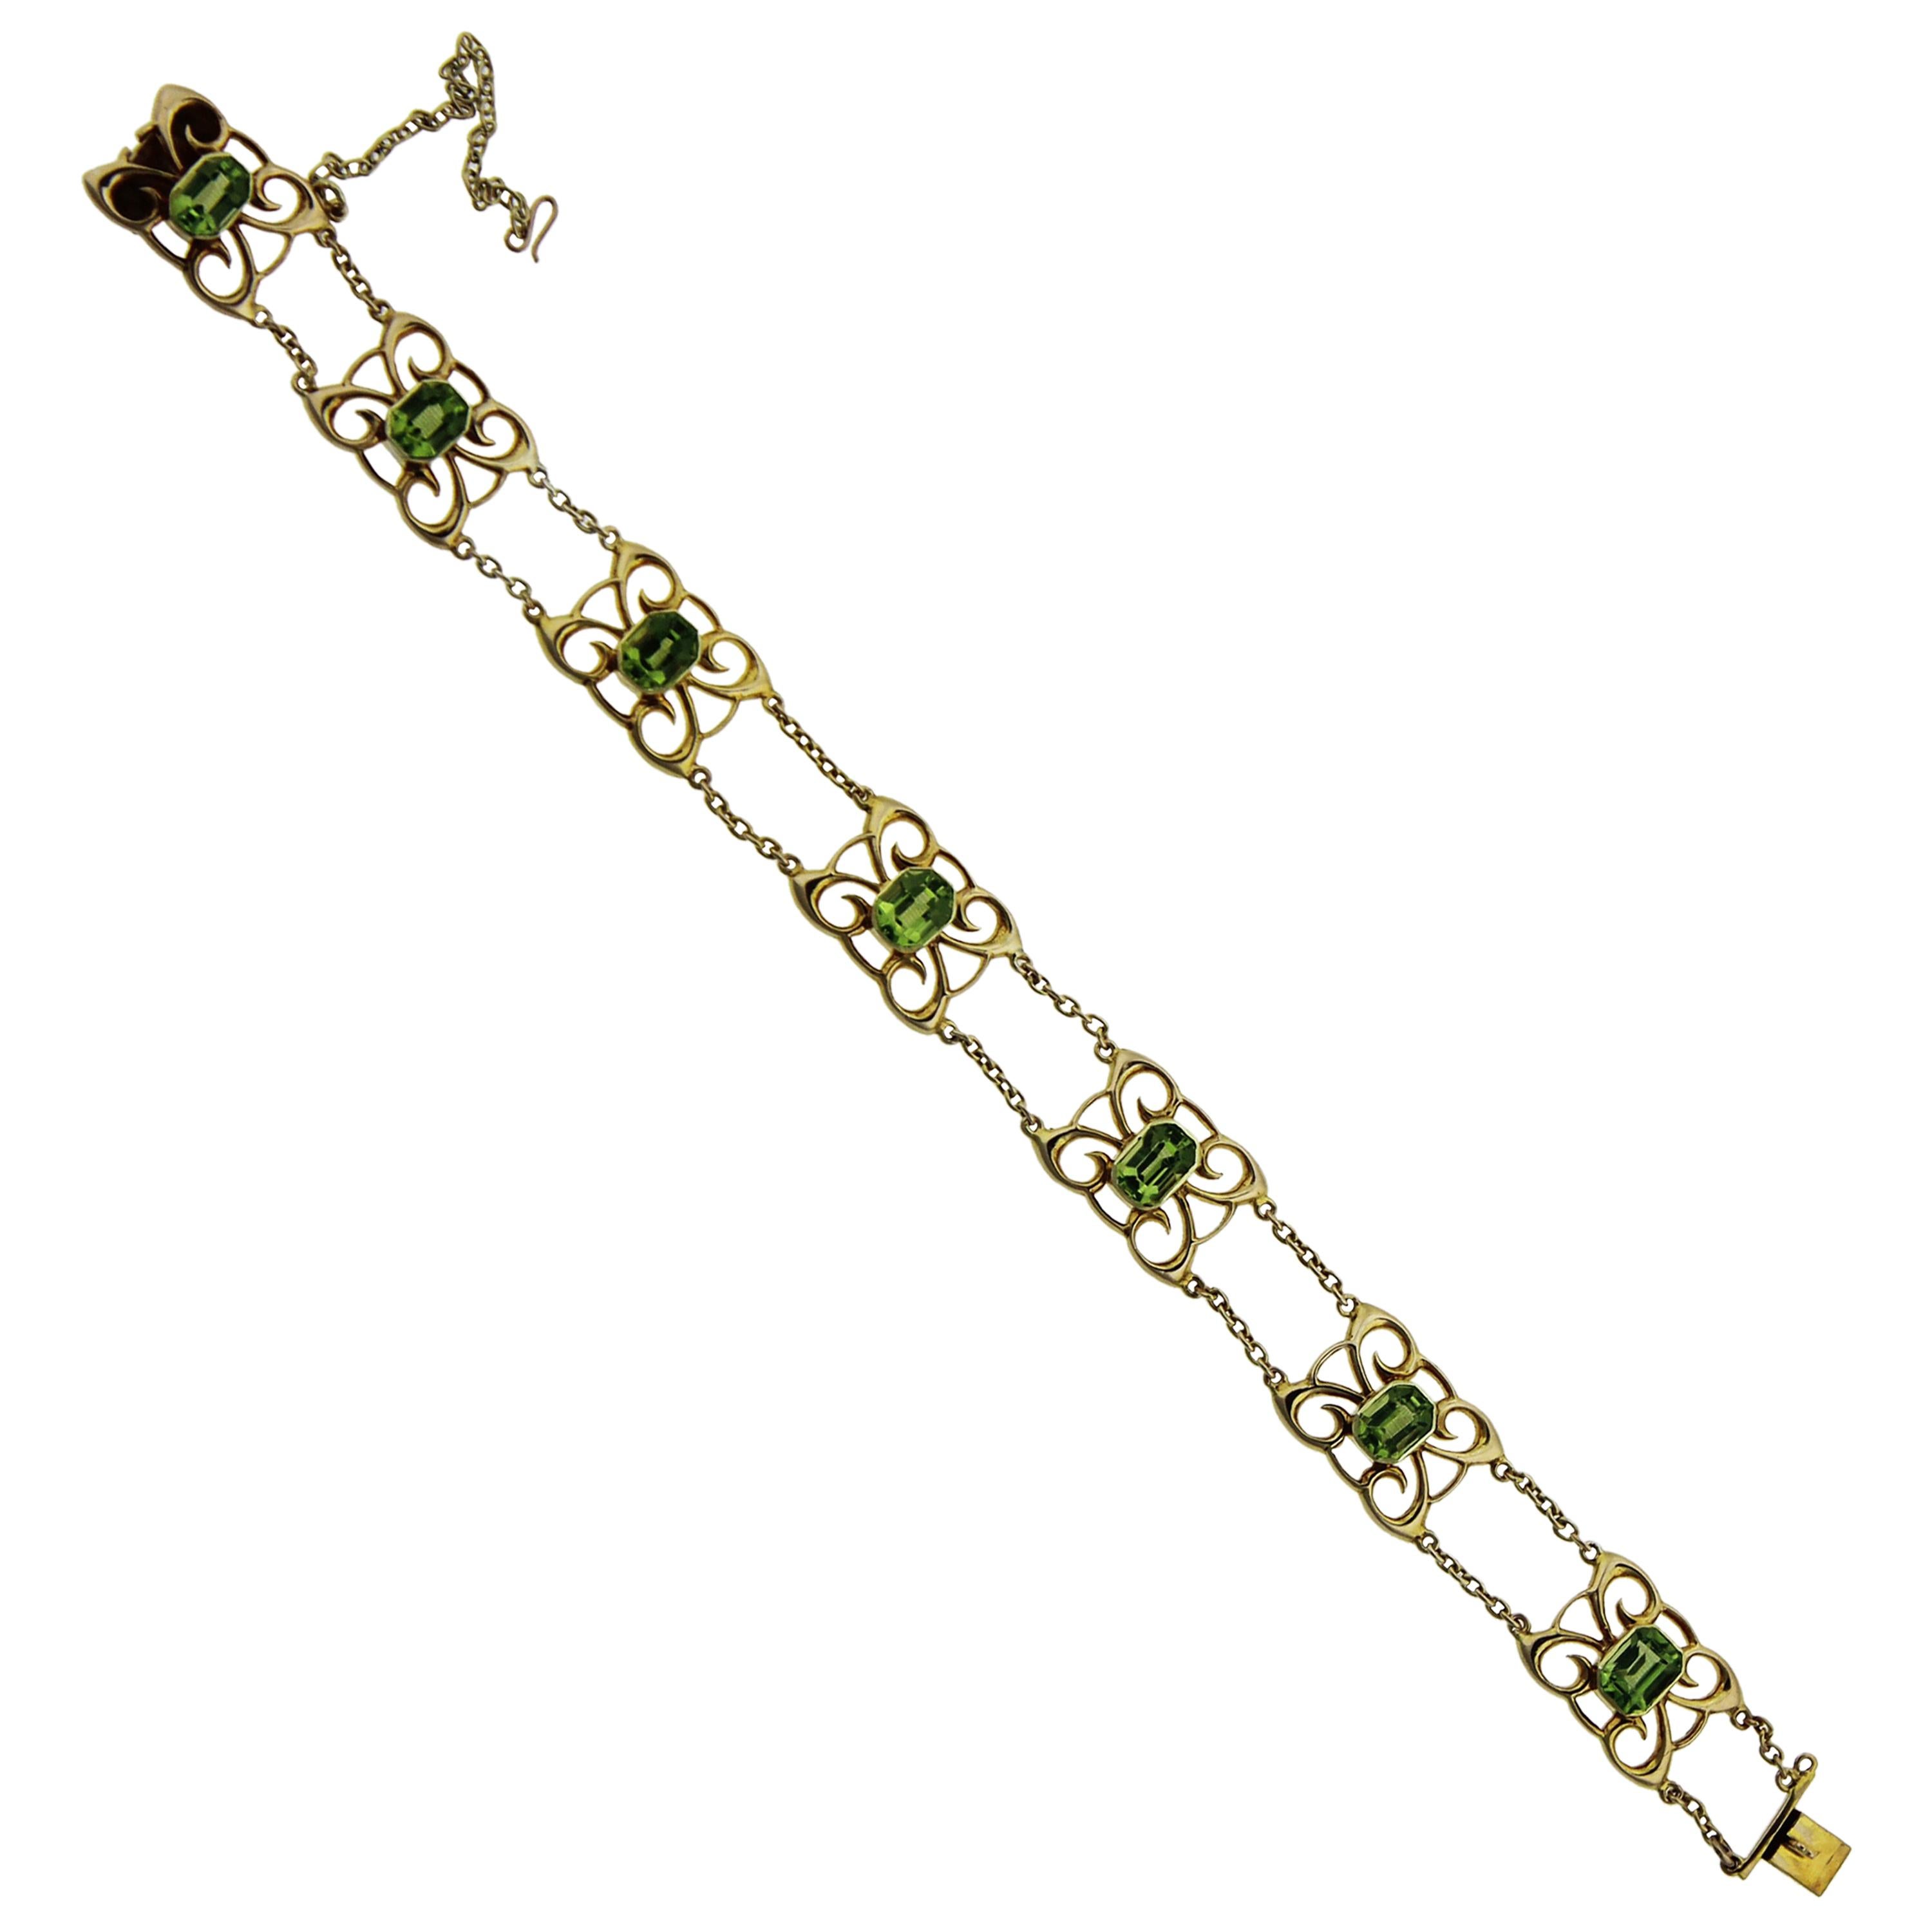 Antique Edwardian 15 Carat Yellow Gold Peridot Bracelet in European Design